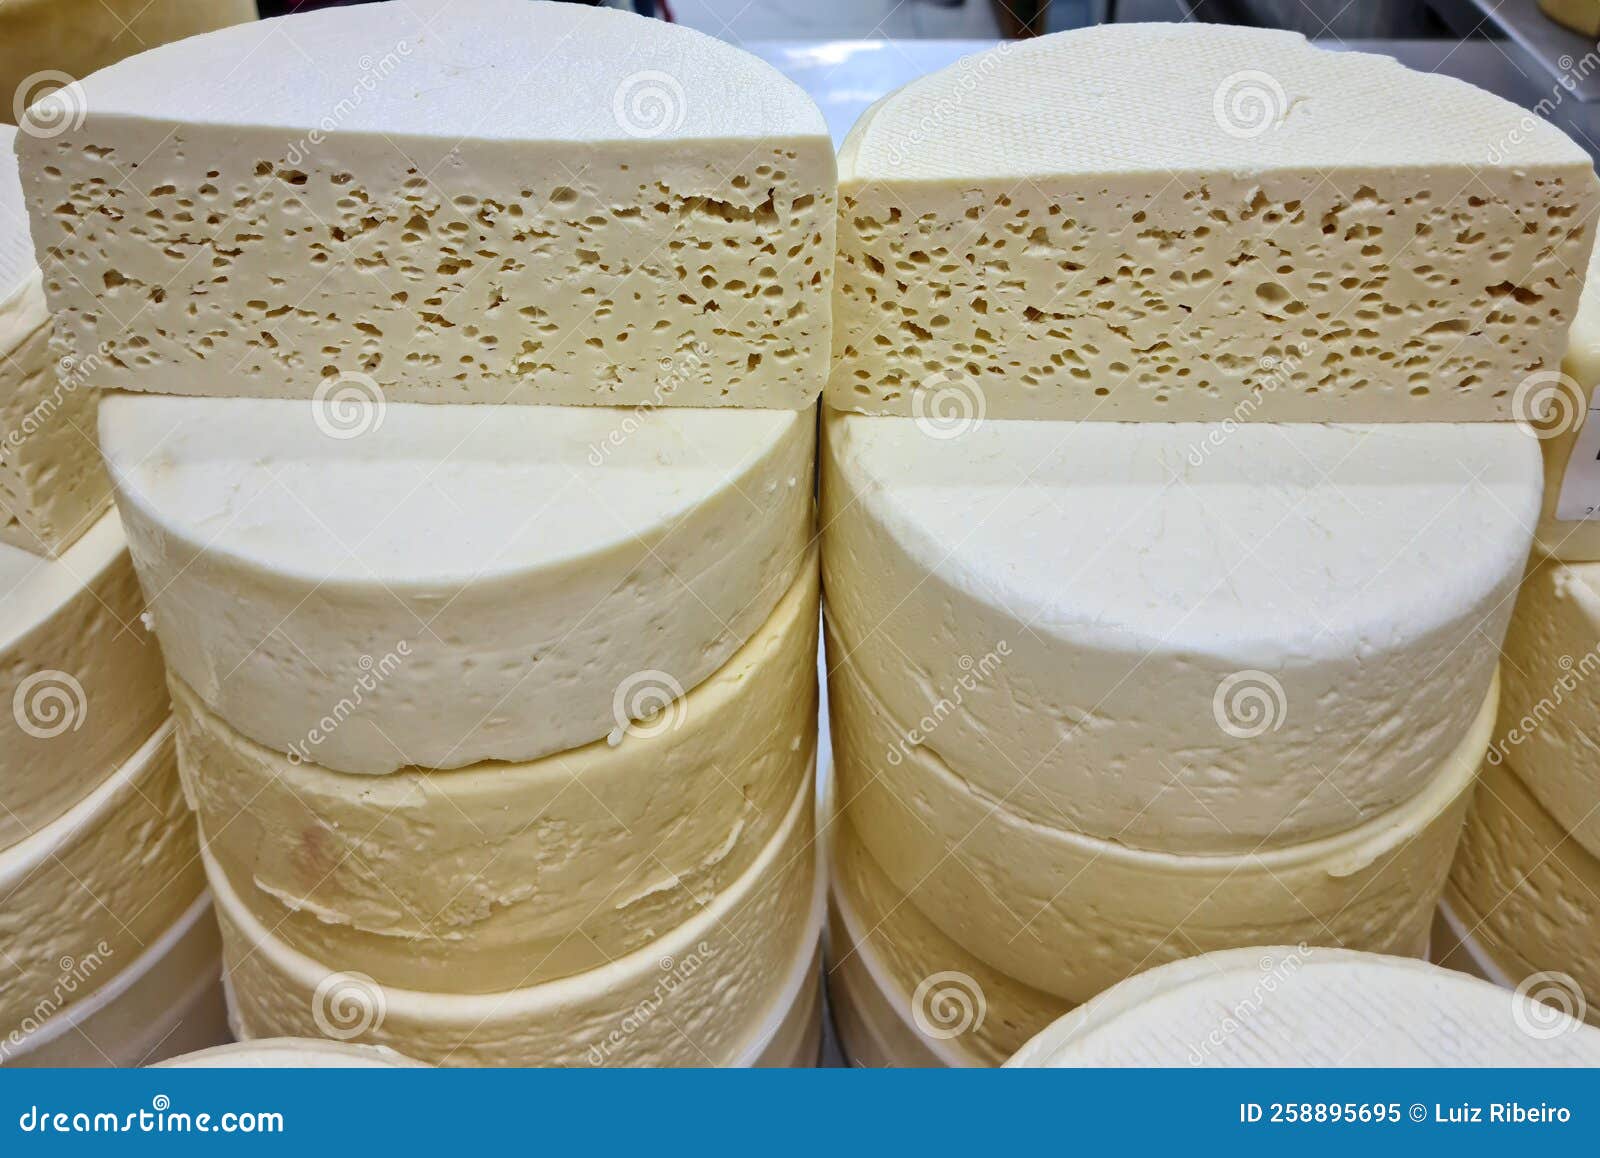 furadinho cheese produced in minas gerai